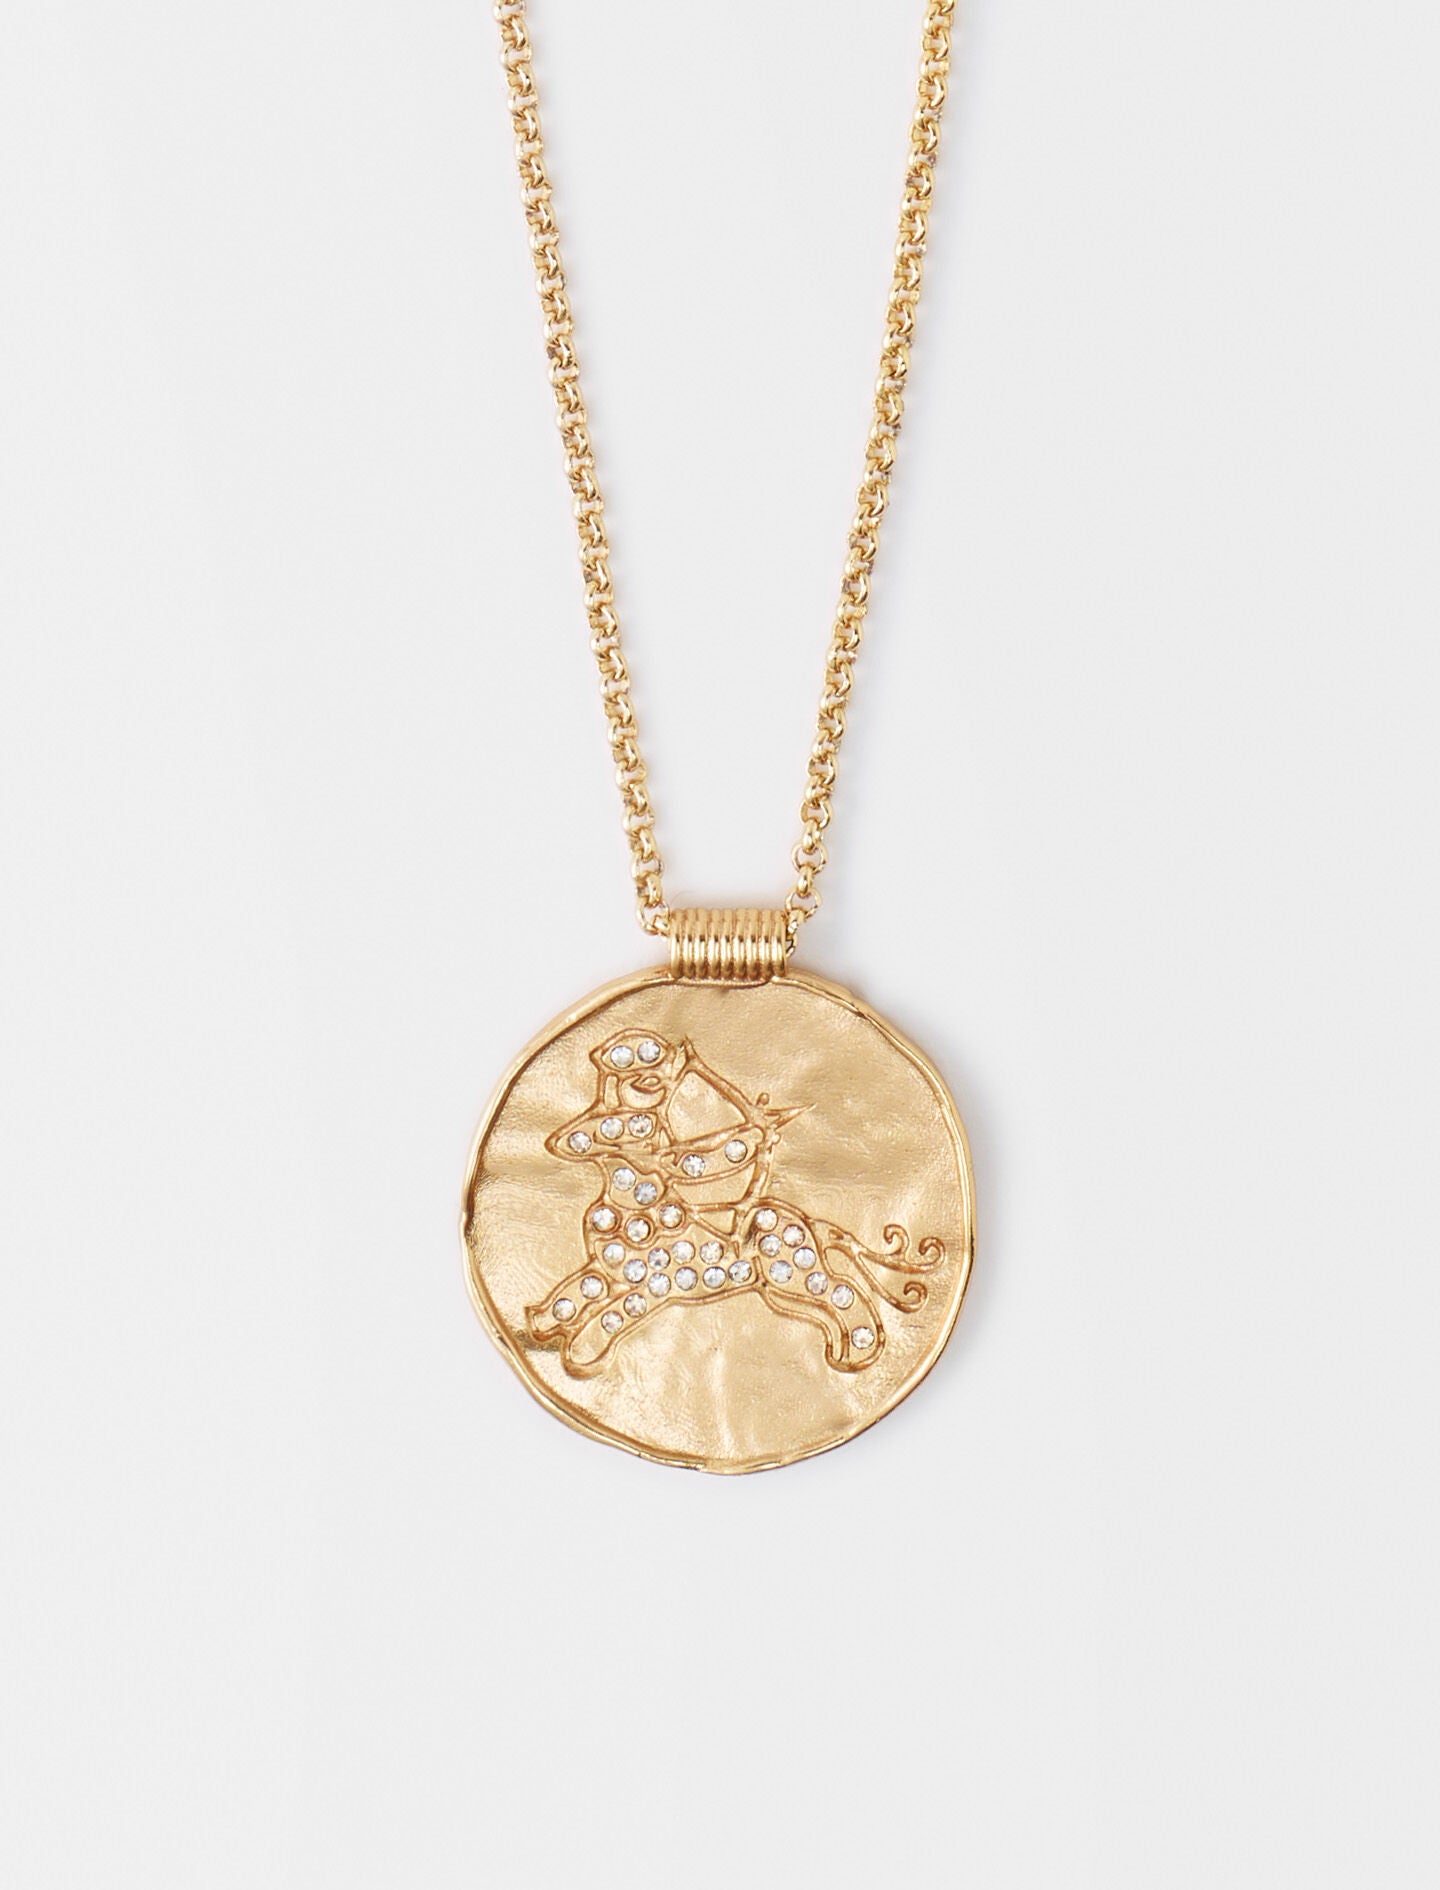 Sagittarius-featured-zodiac medal